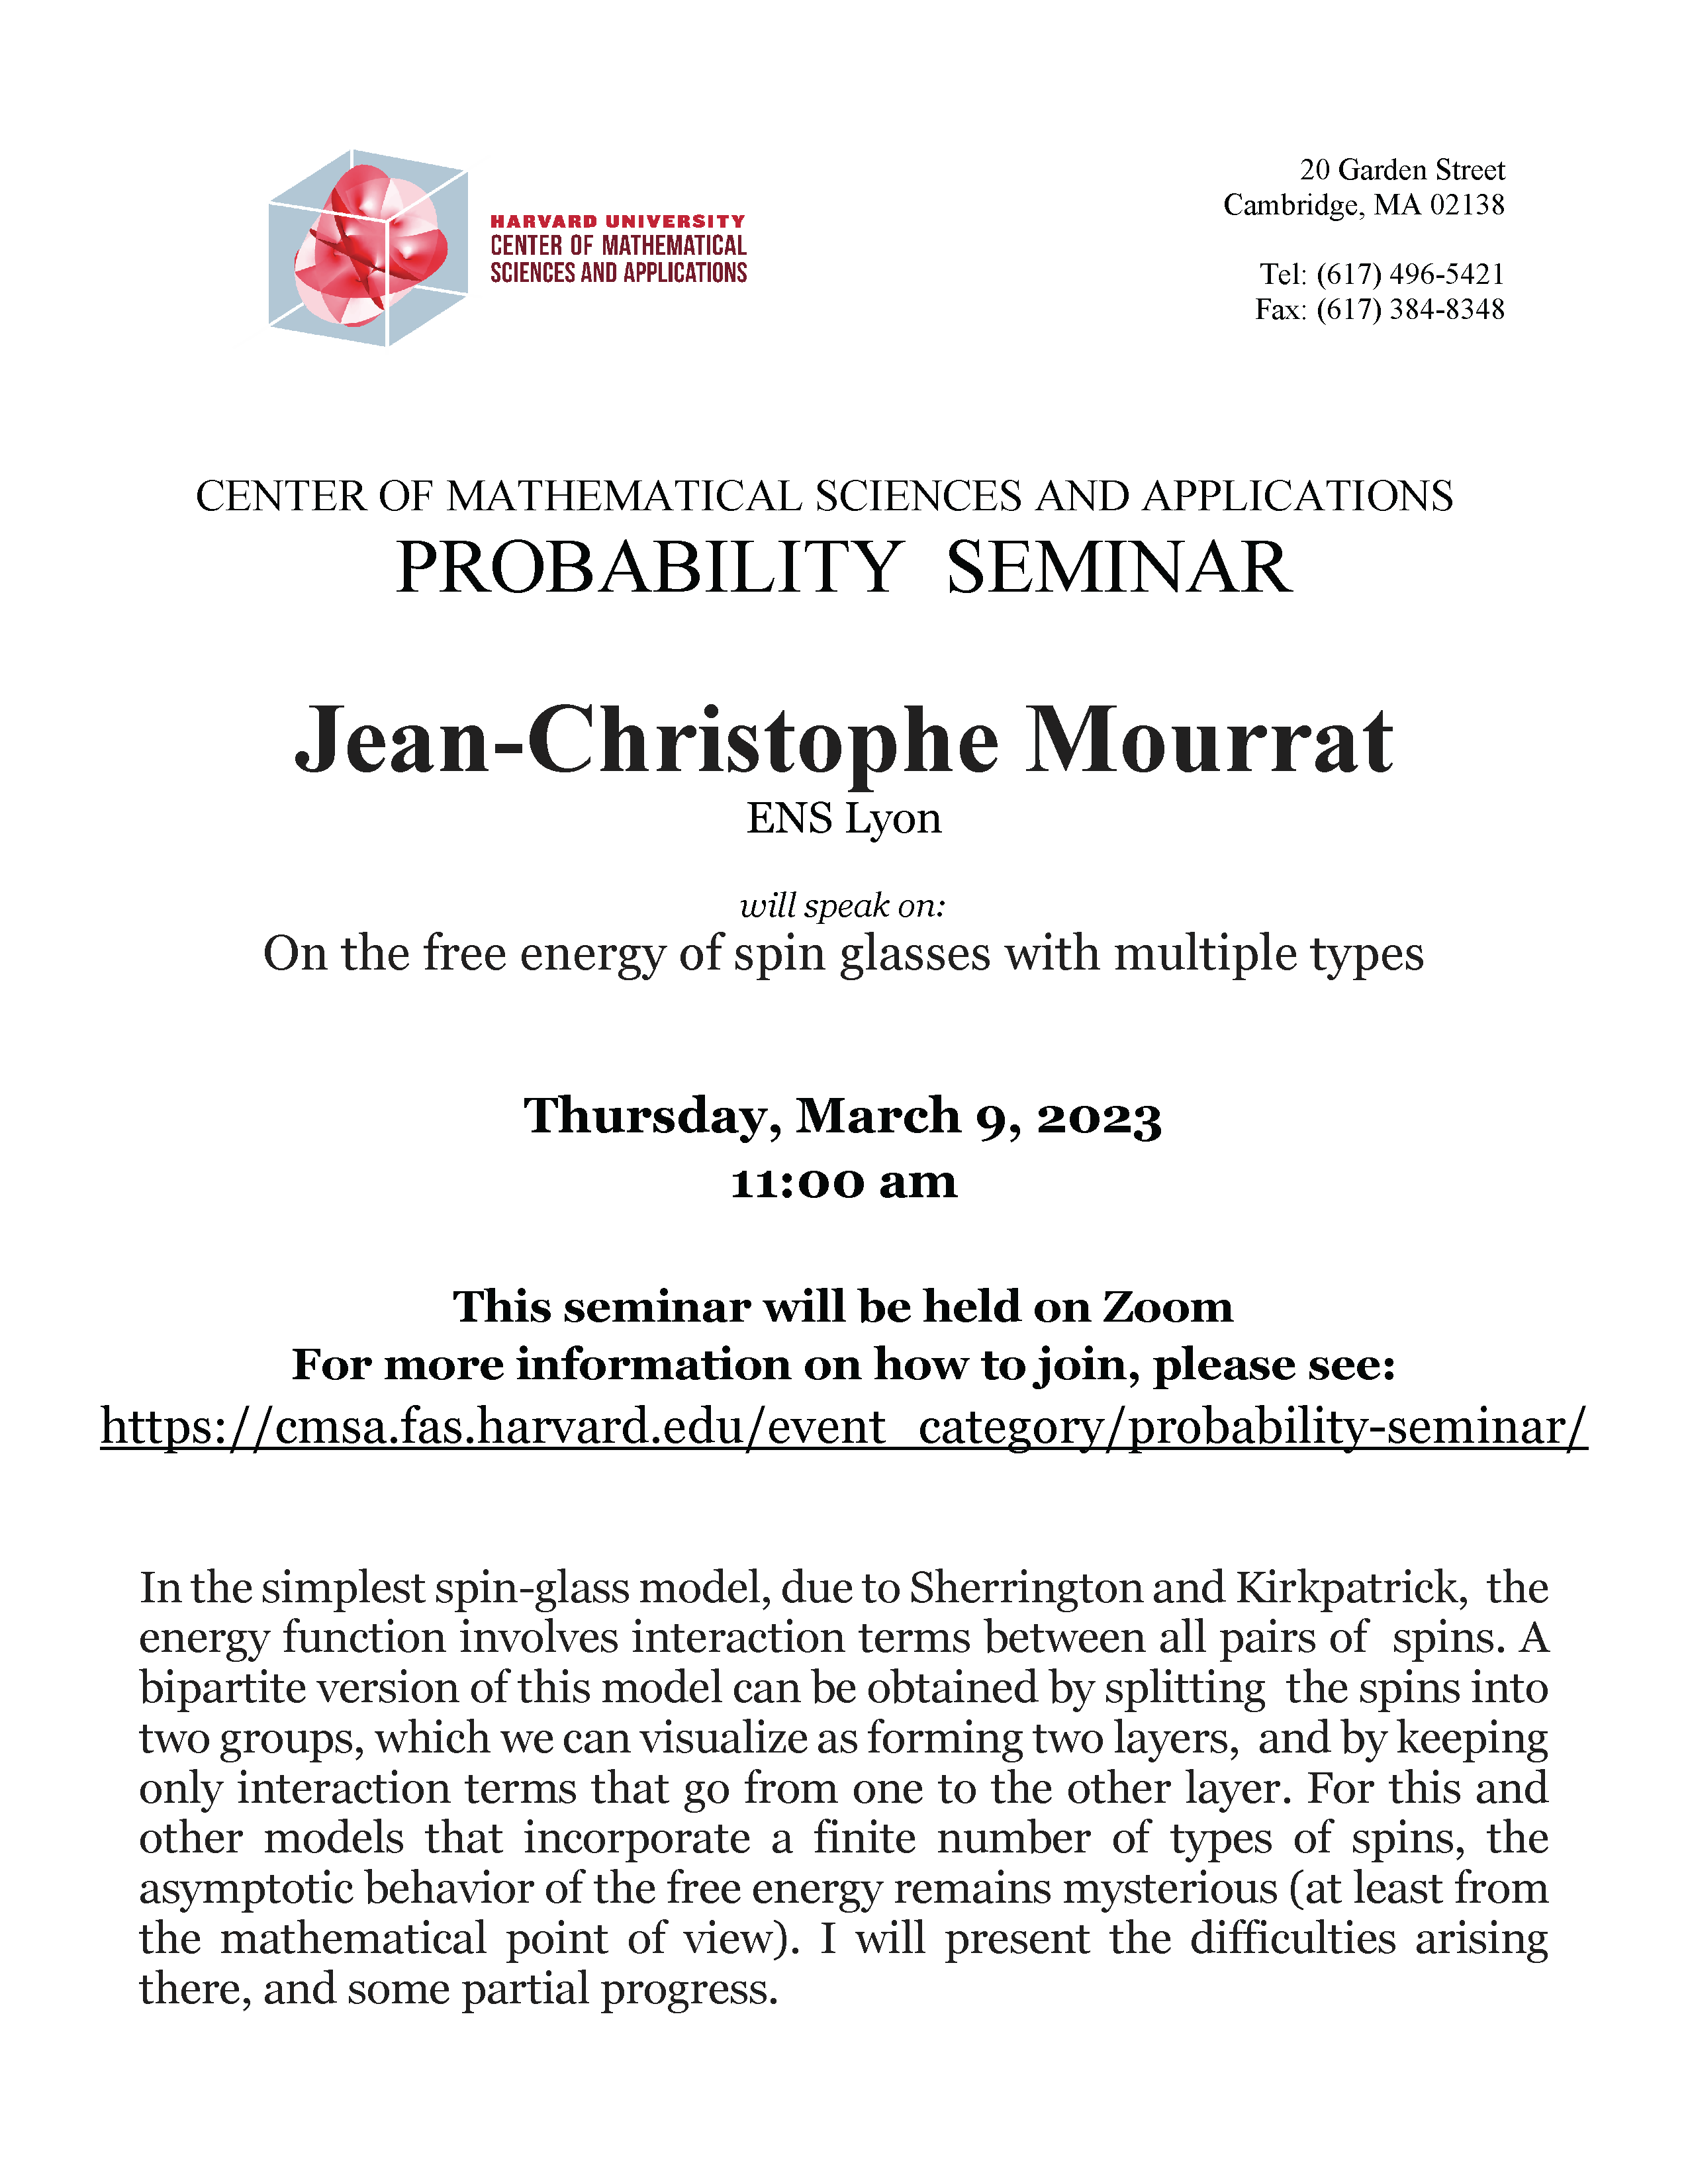 CMSA Probability Seminar 03.09.23